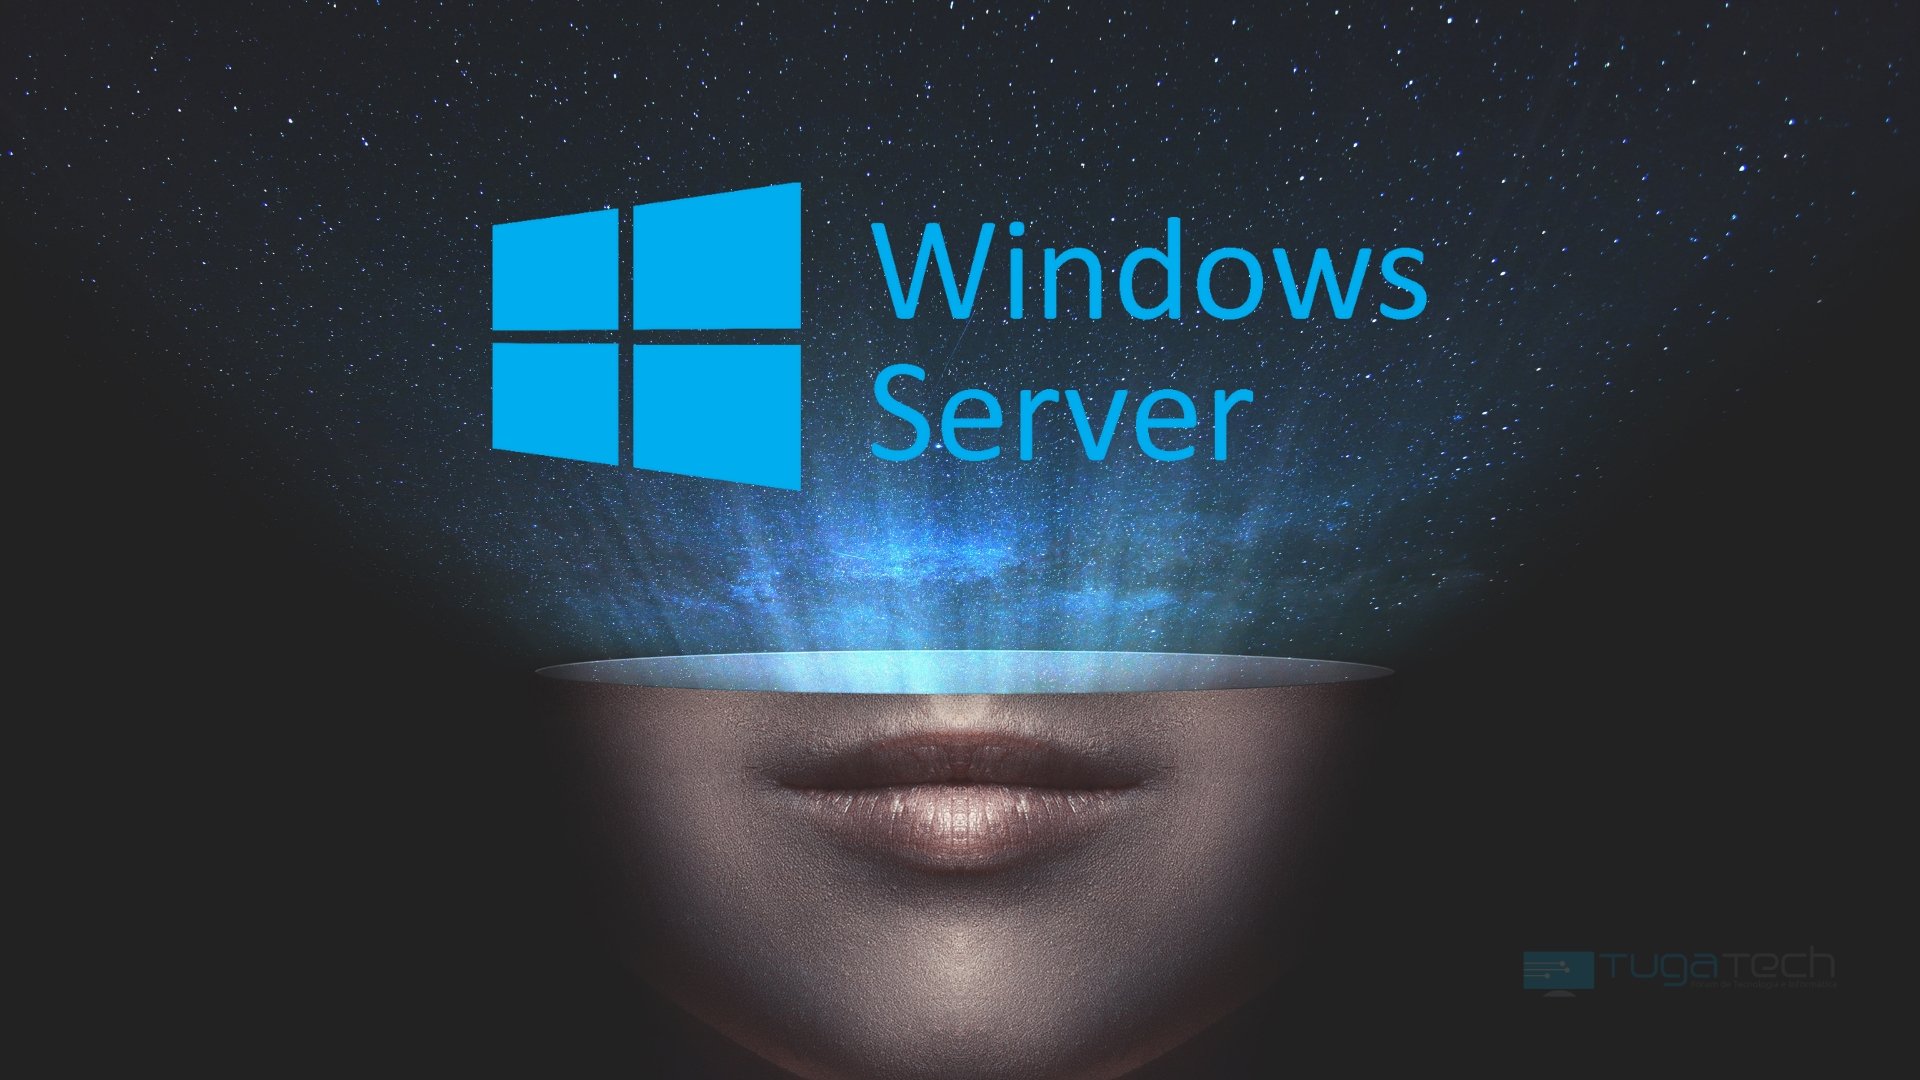 Windows server